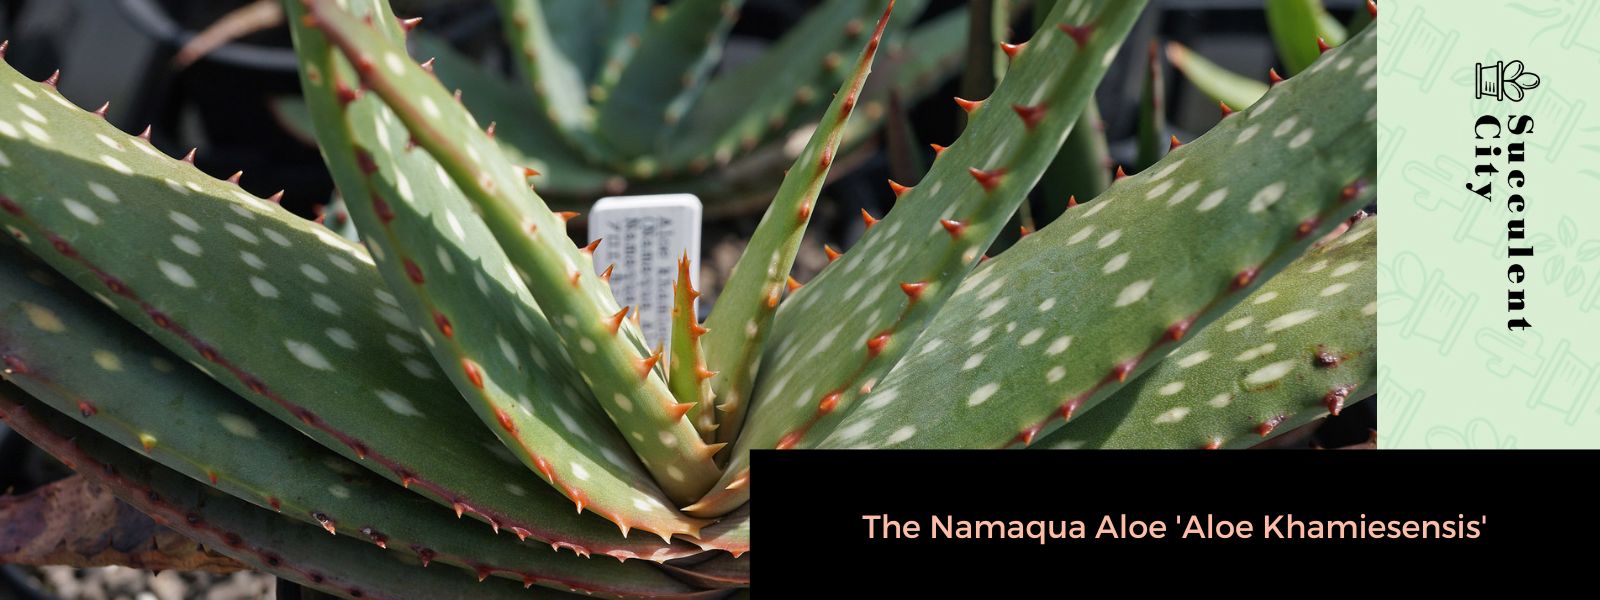 El aloe Namaqua 'Aloe Khamiesensis'